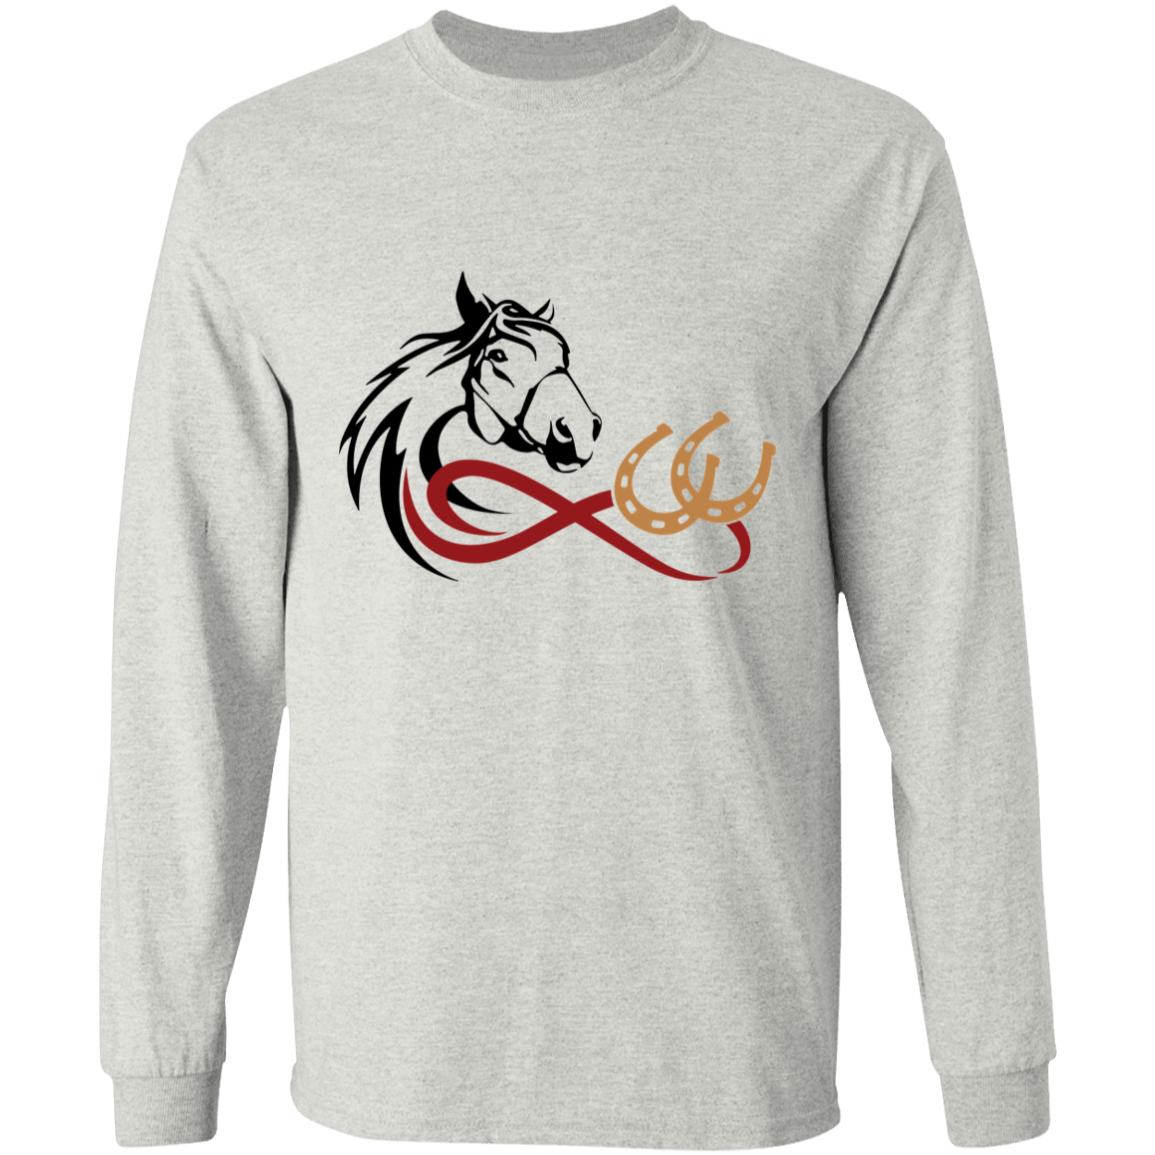 Horse infinity long sleeve t'shirt